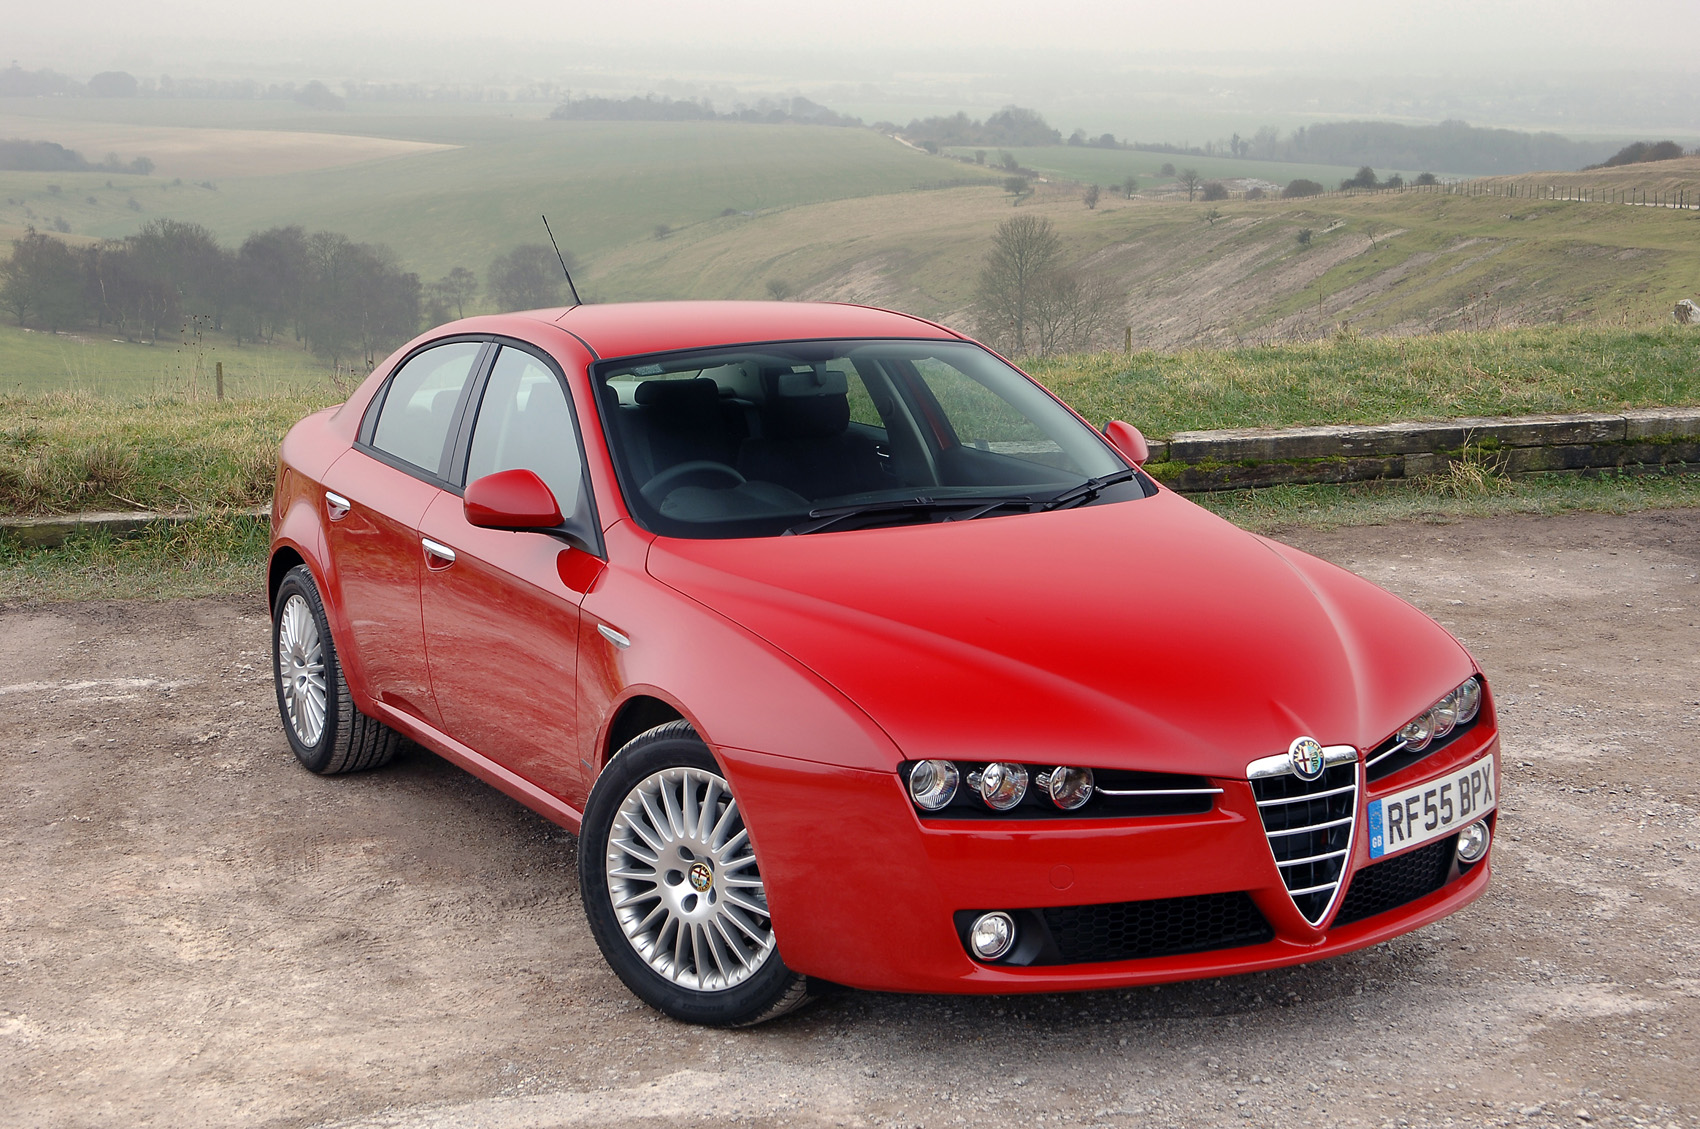 Used Alfa Romeo 159 Saloon (2006 - 2011) Review